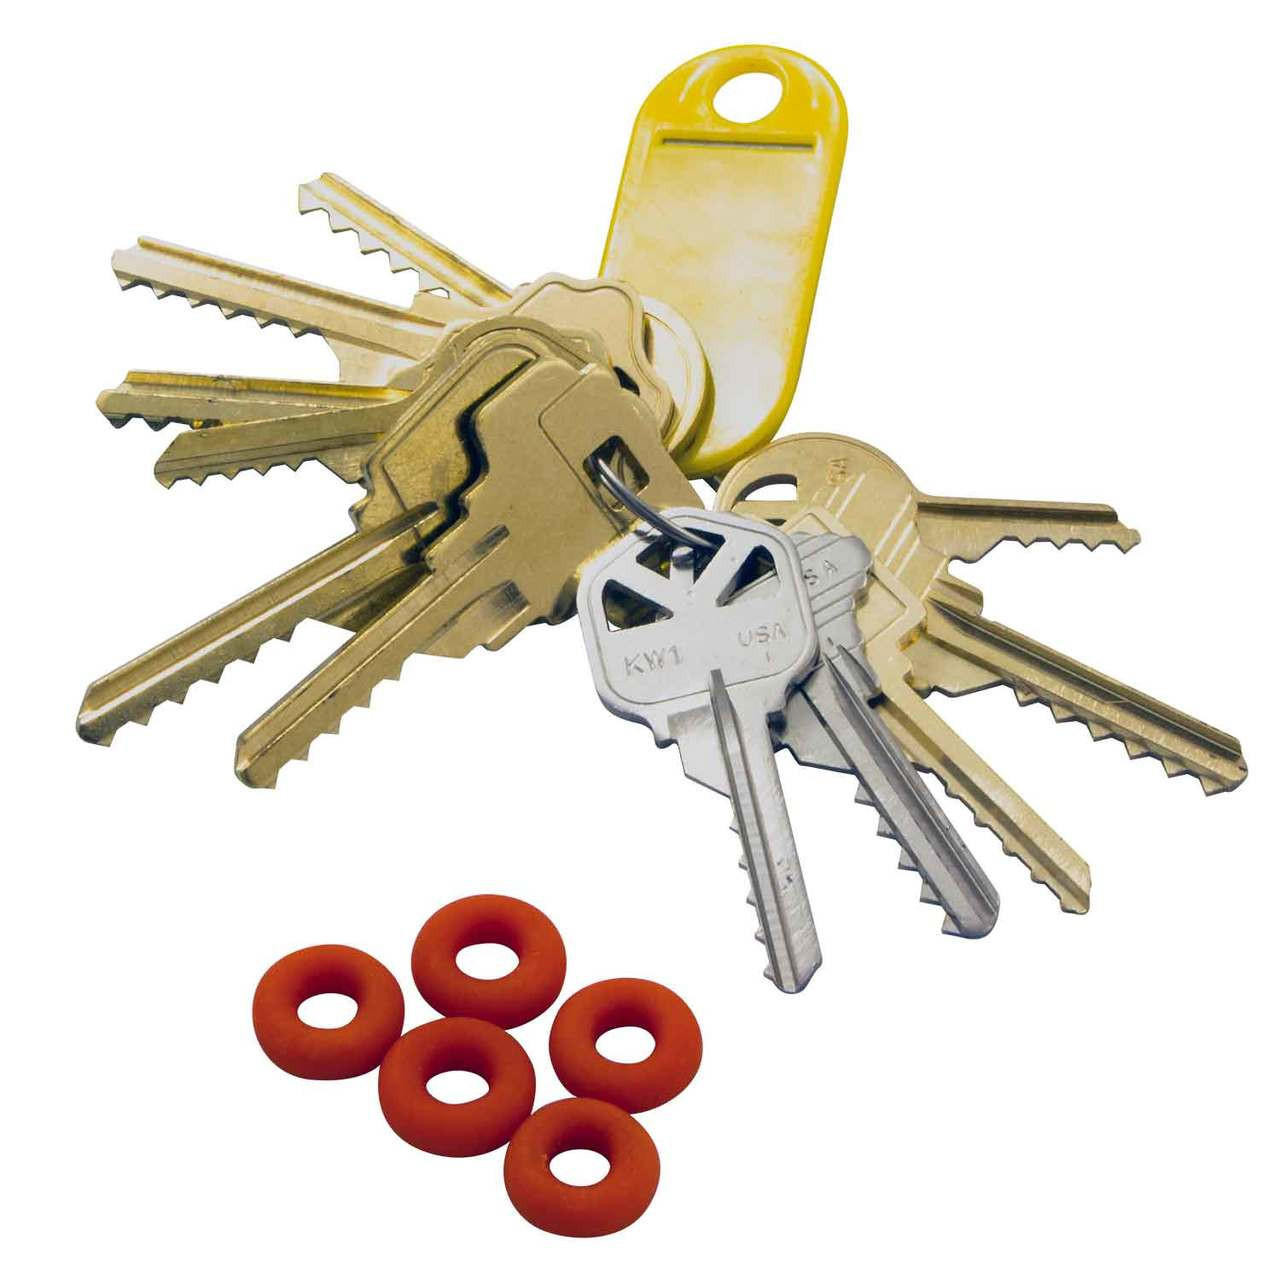 Ultimate Key Bump Locks